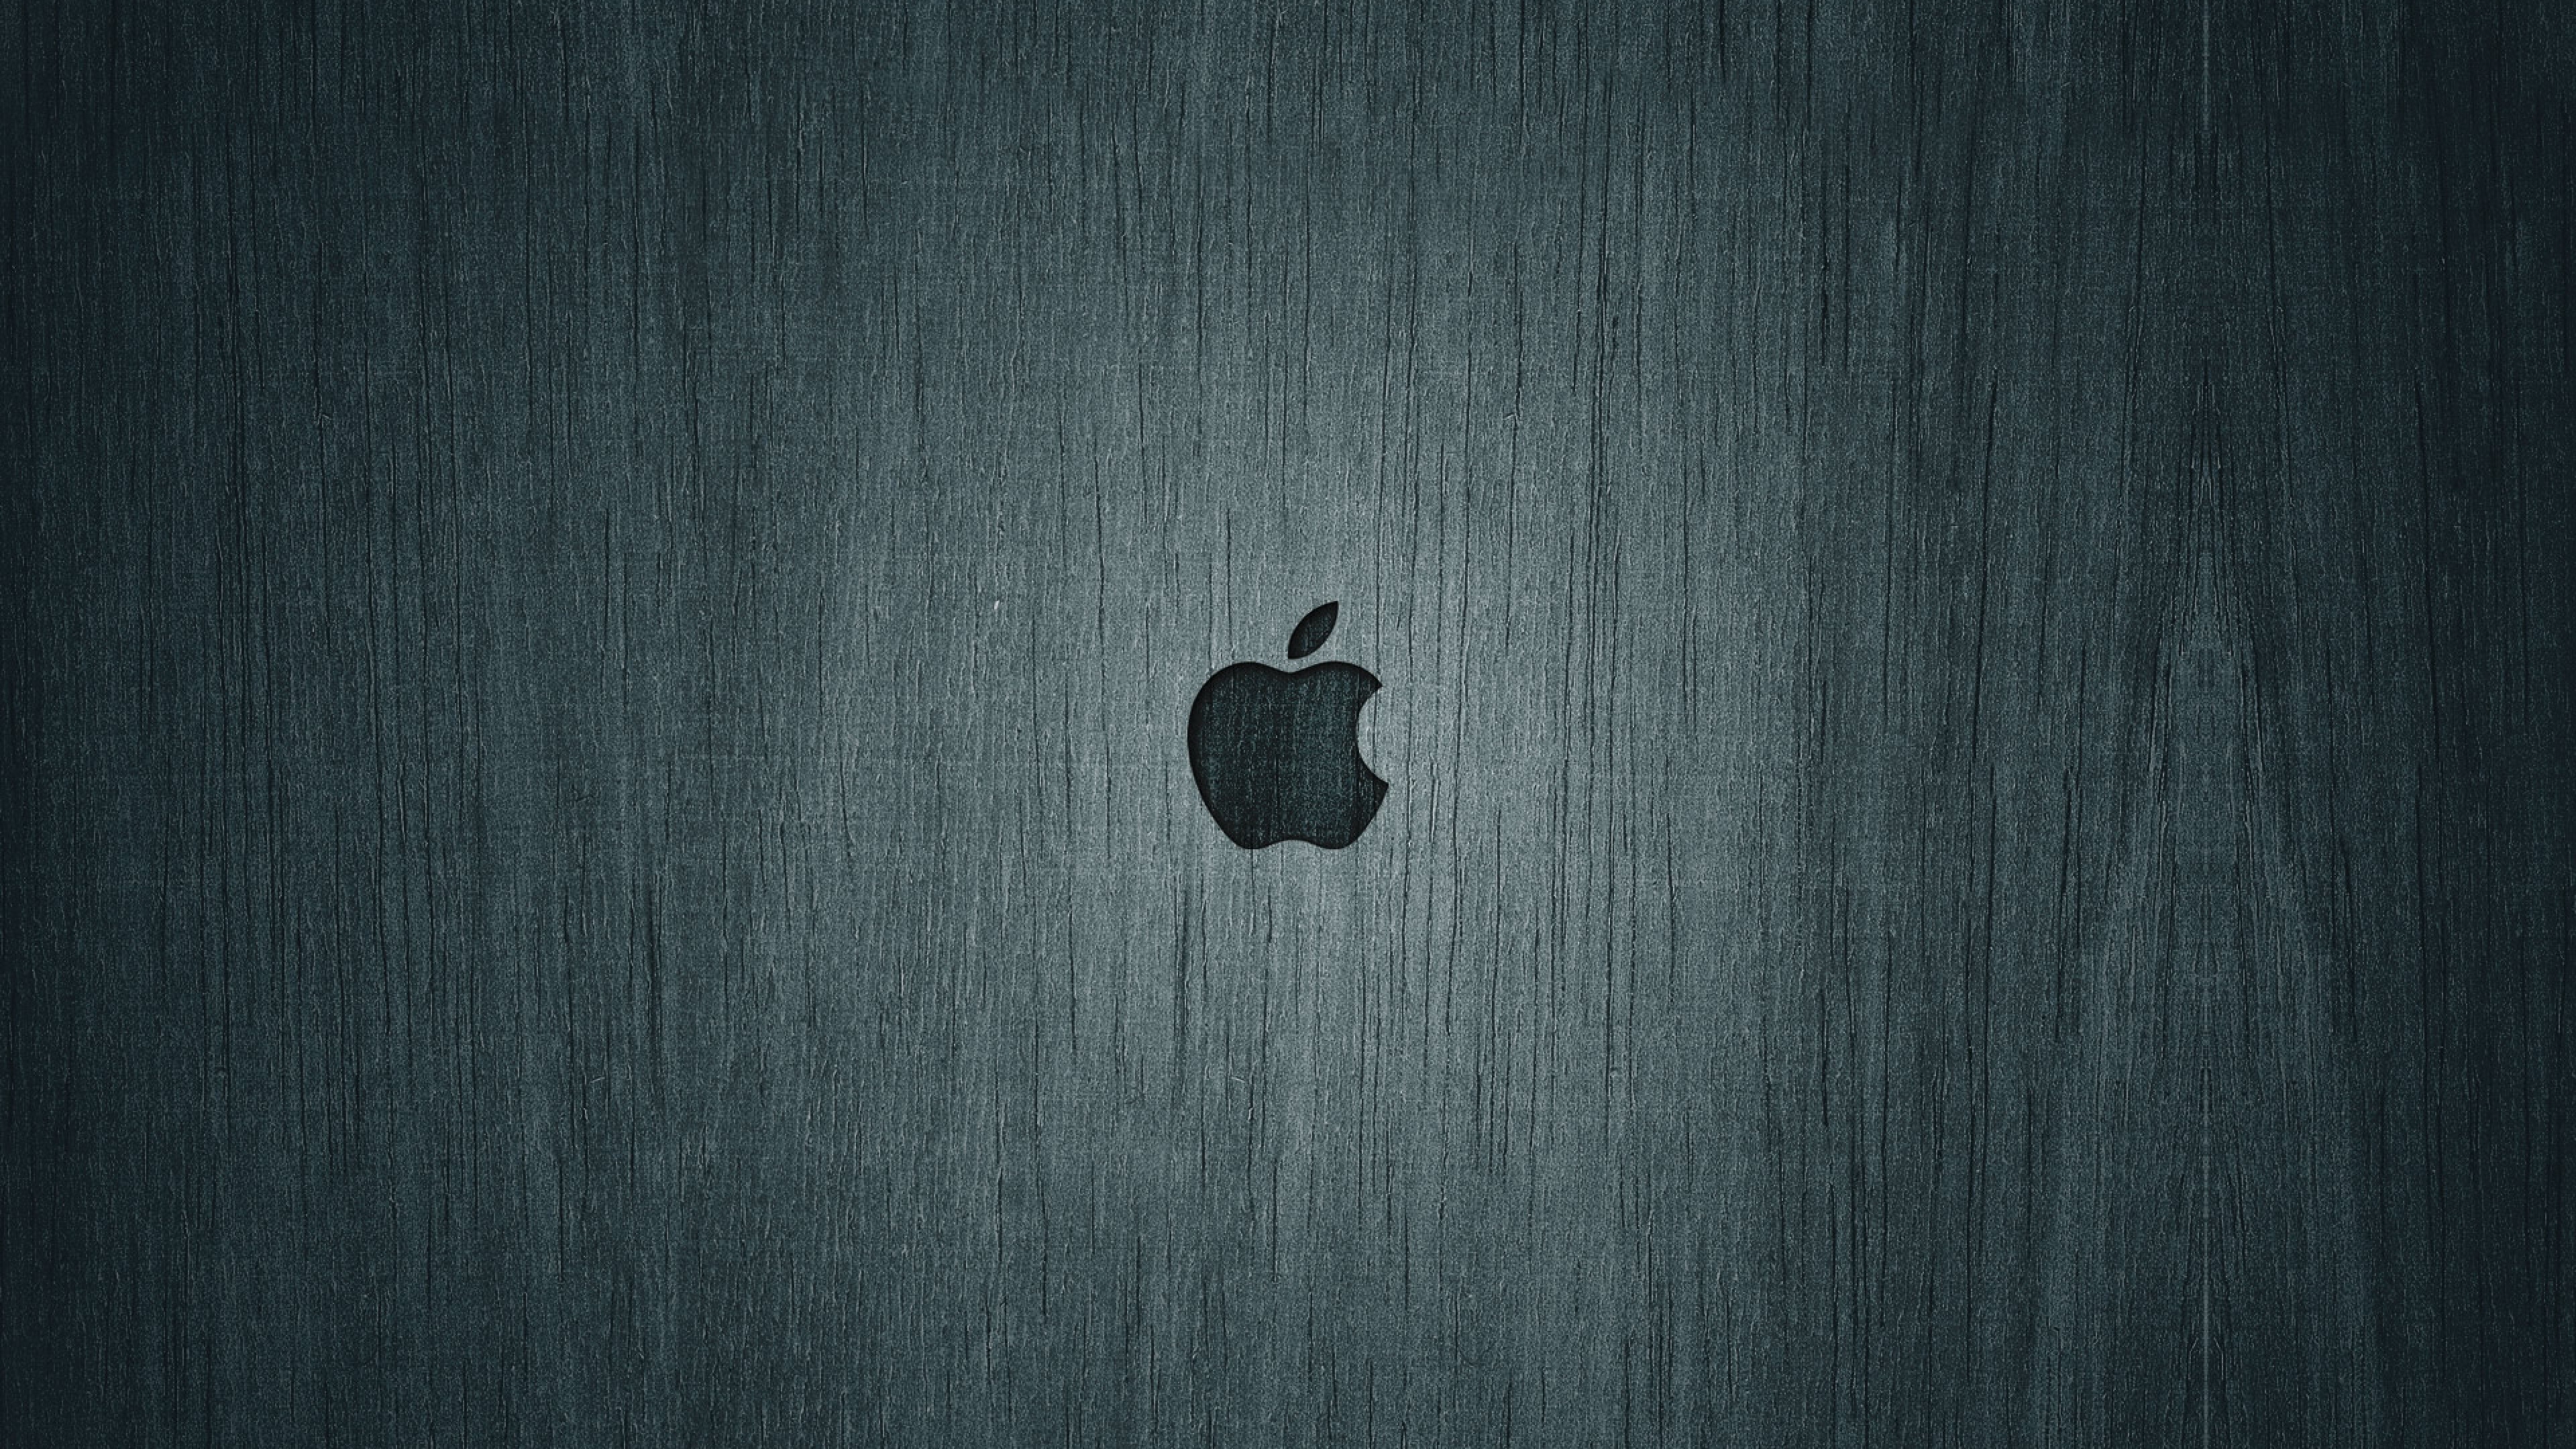  Apple Mac Background Black Brand Logo Wallpaper Background 4K